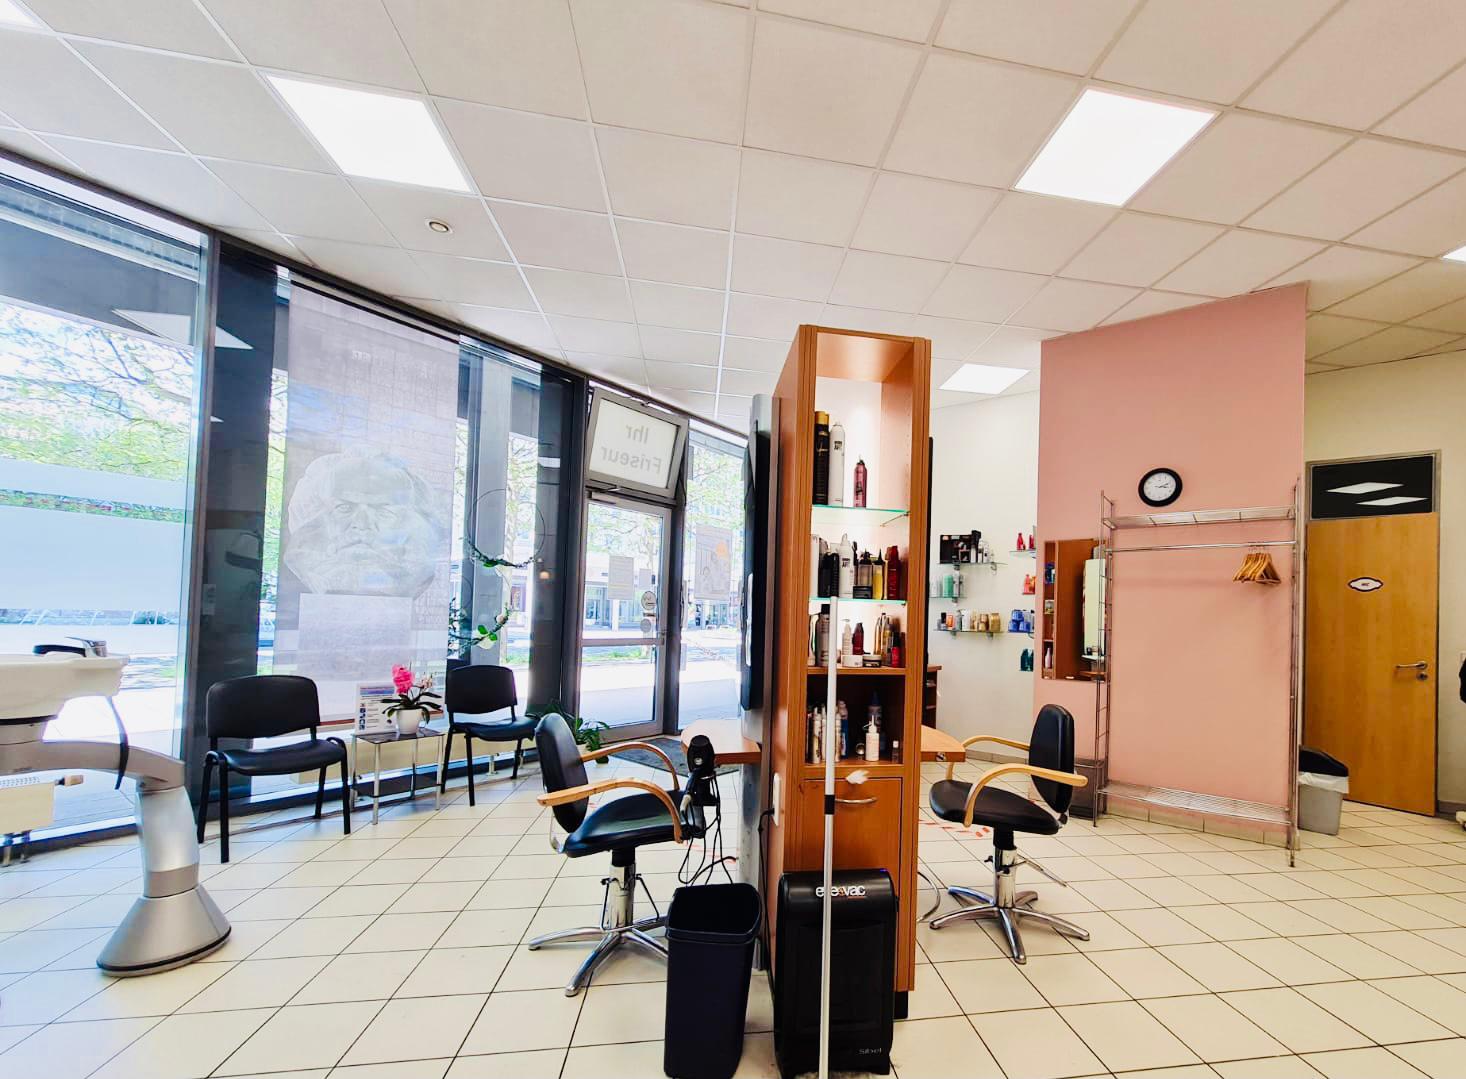 Salon Beauty – Ihr Friseur in Chemnitz, Rosenhof 23 in Chemnitz